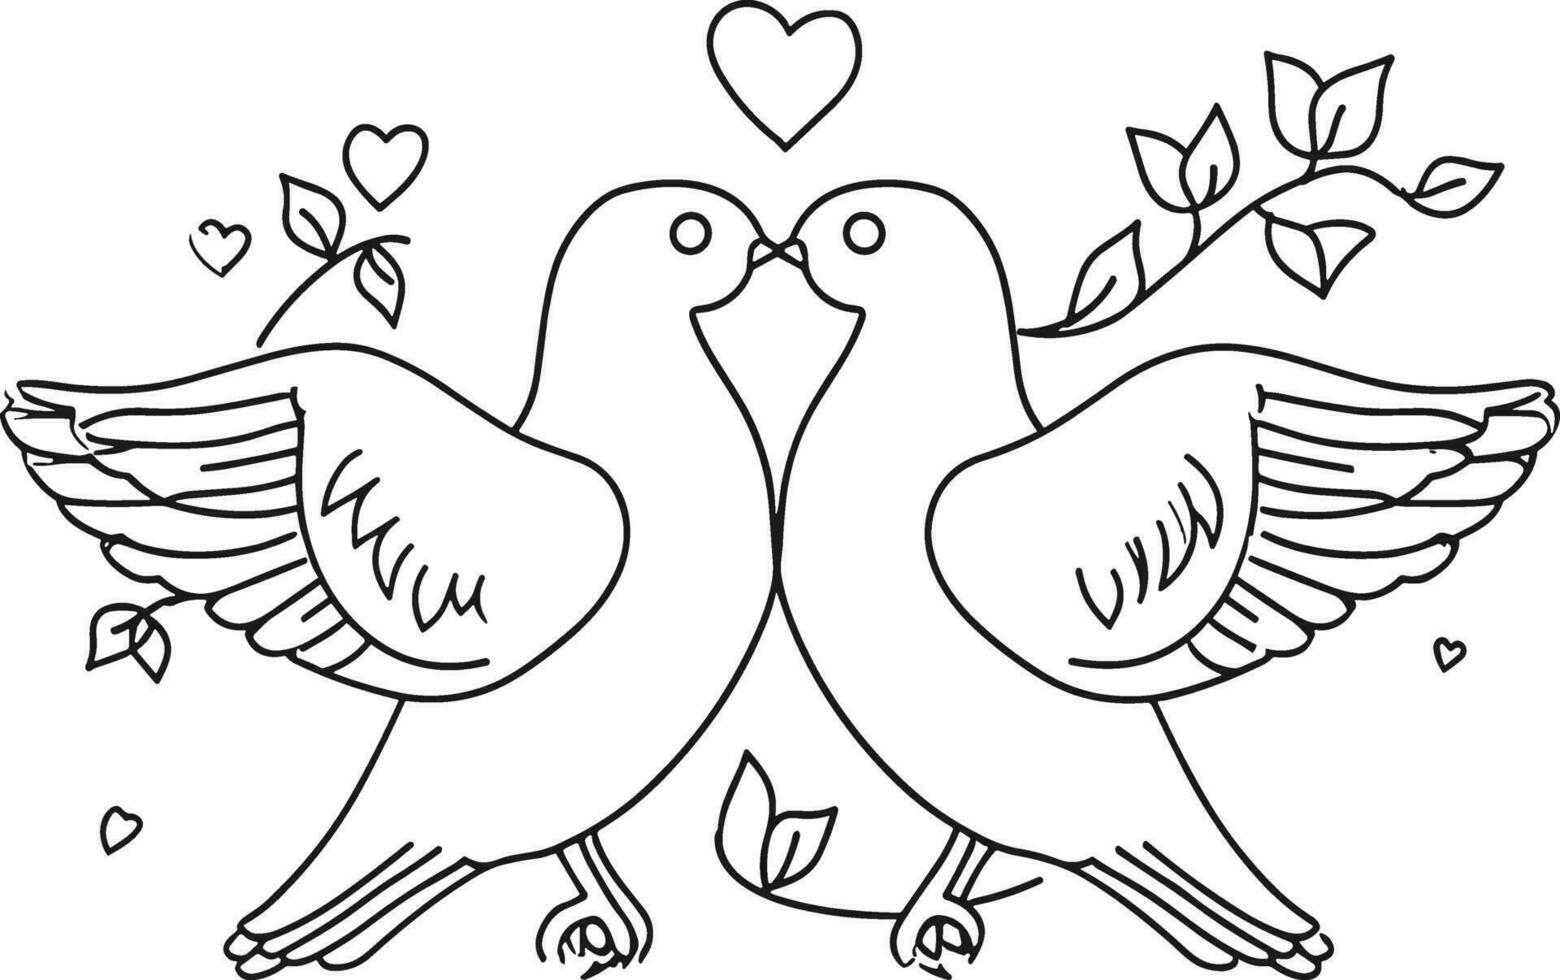 Pareja paloma de amar, vector de paloma línea Arte ilustración , San Valentín día concepto, romántico símbolo, amor tema, decorativo, romántico aves, San Valentín decoración, Pareja aves